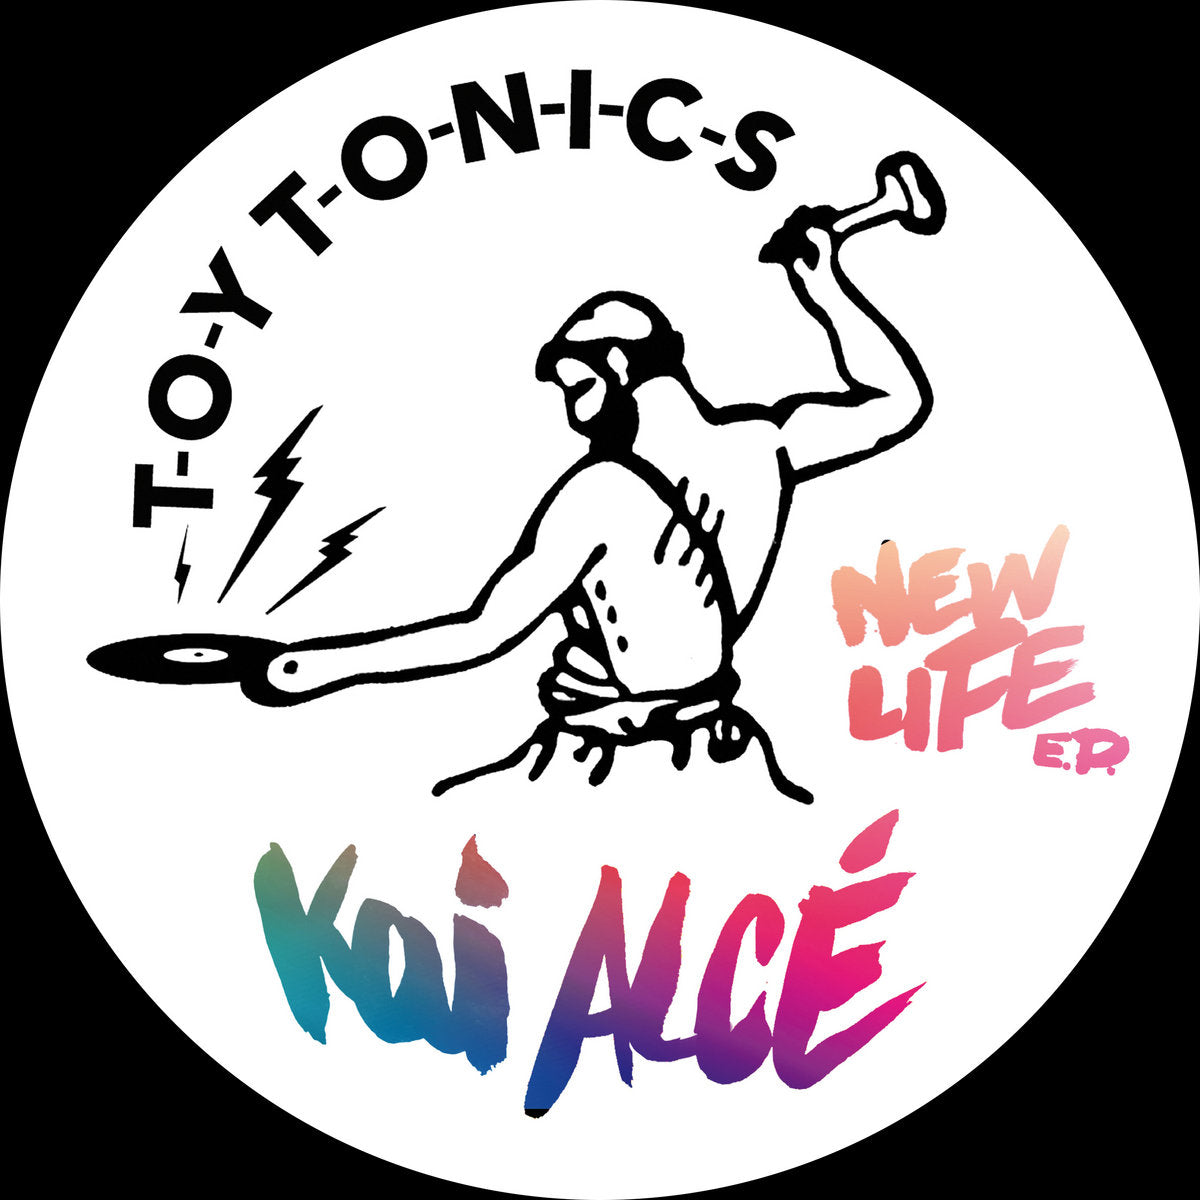 Kay Alce - New Life EP [Toy Tonics]